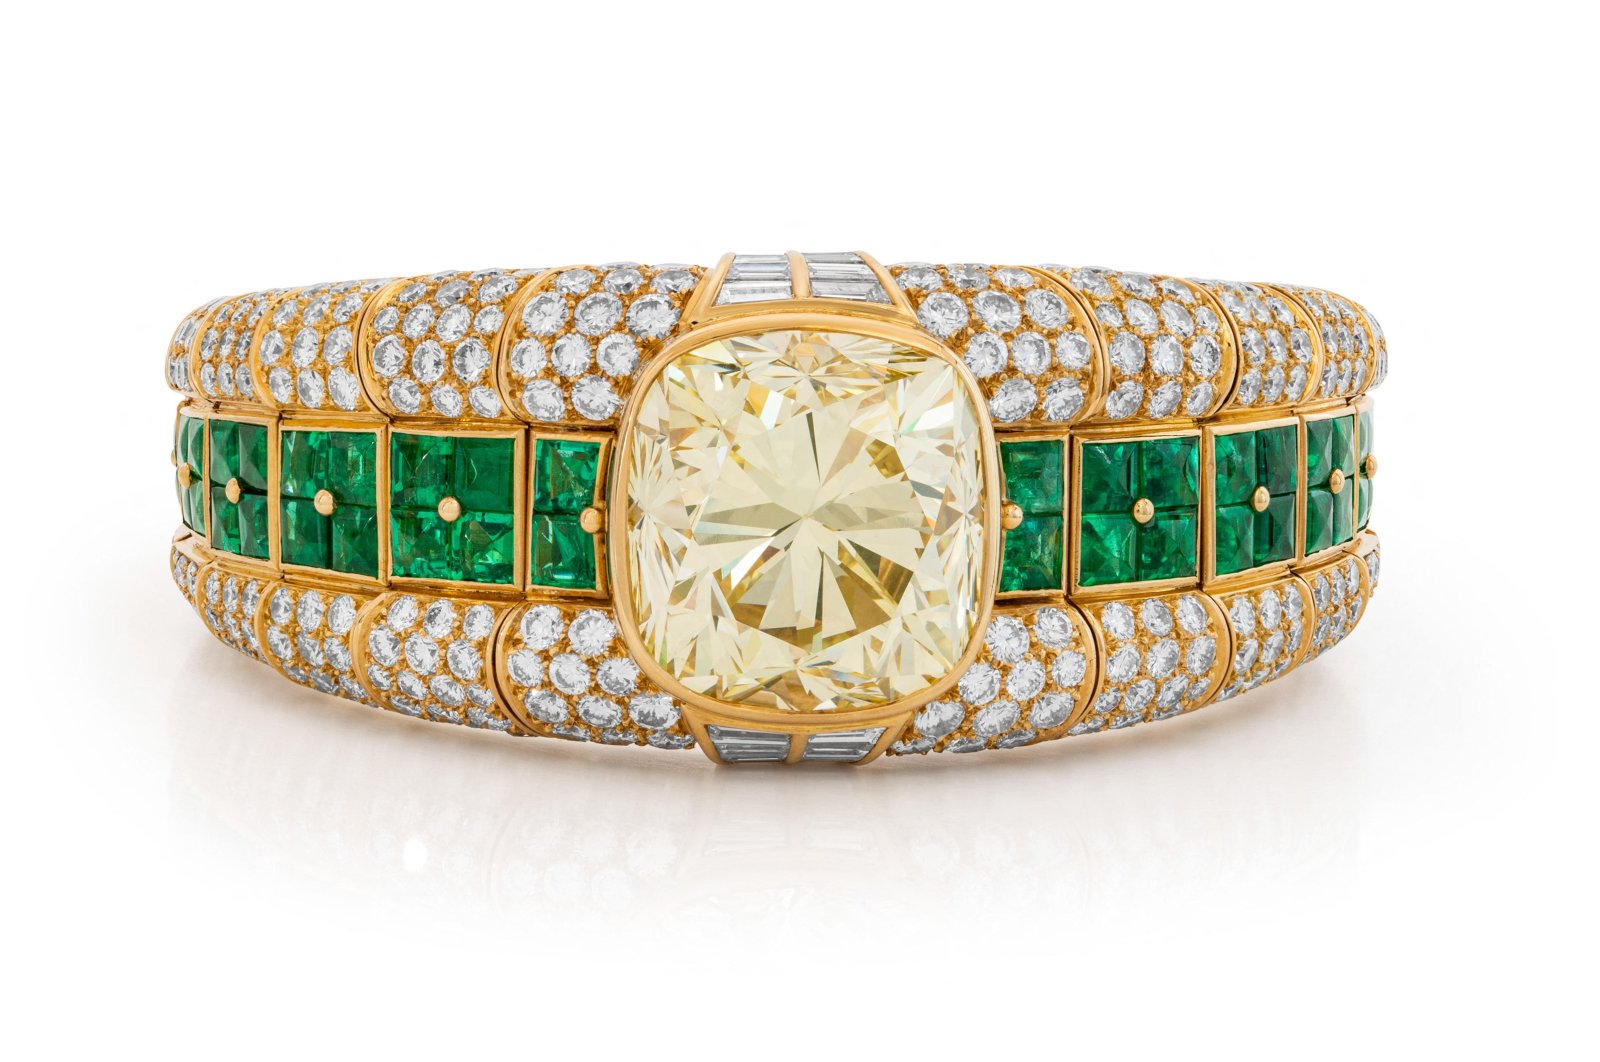 A Bulgari-colored diamond and emerald bracelet, in Geneva, Switzerland, March 28, 2023. (AFP Photo)